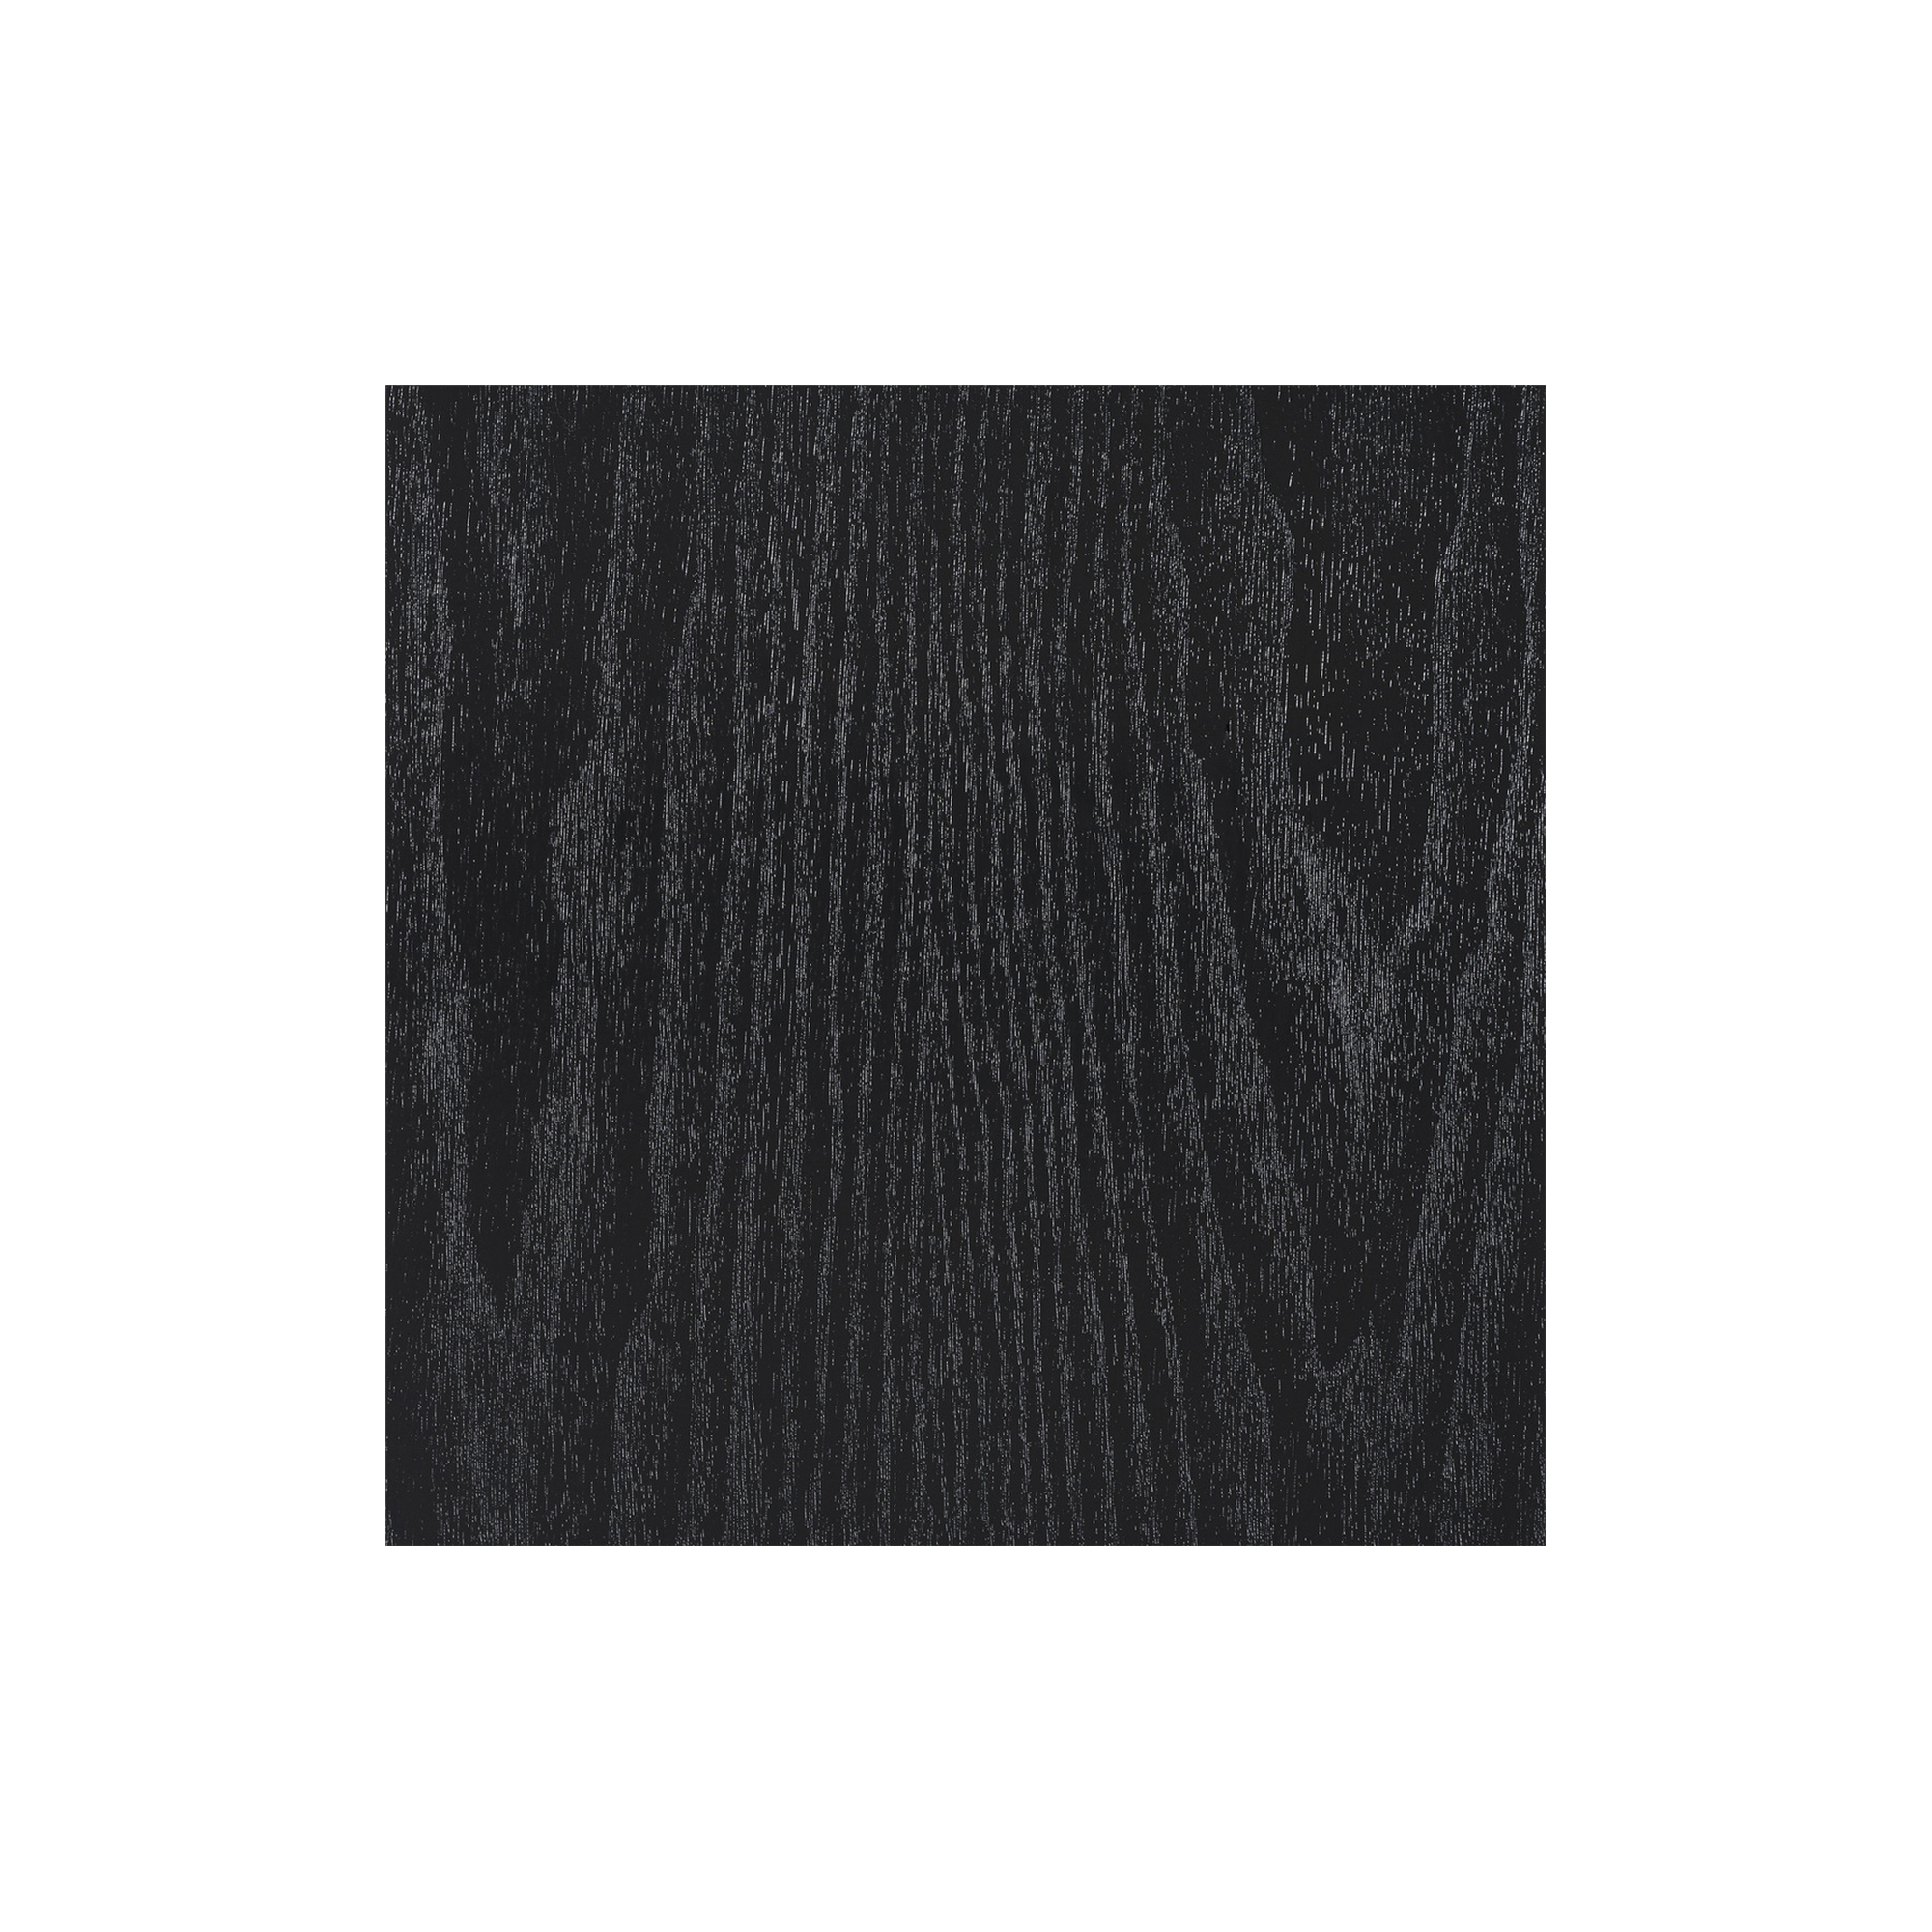 d-c-fix vinilo adhesivo muebles Madera negra efecto madera autoadhesivo  impermeable decorativo para cocina, armario, puerta, mesa papel pintado  forrar rollo láminas 67,5 cm x 2 m